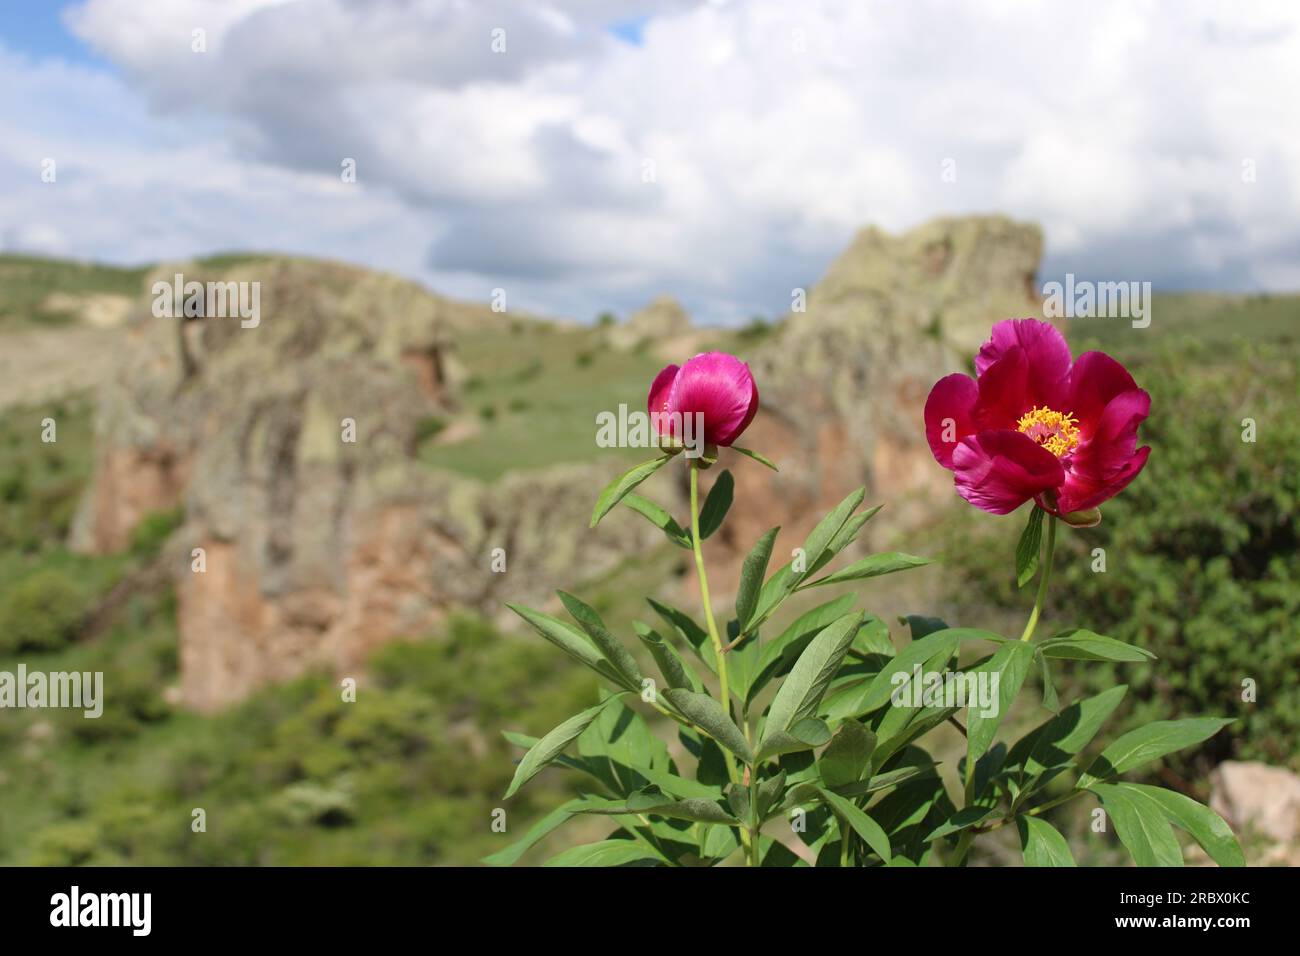 endemic tulip native to the city of yozgat. Stock Photo